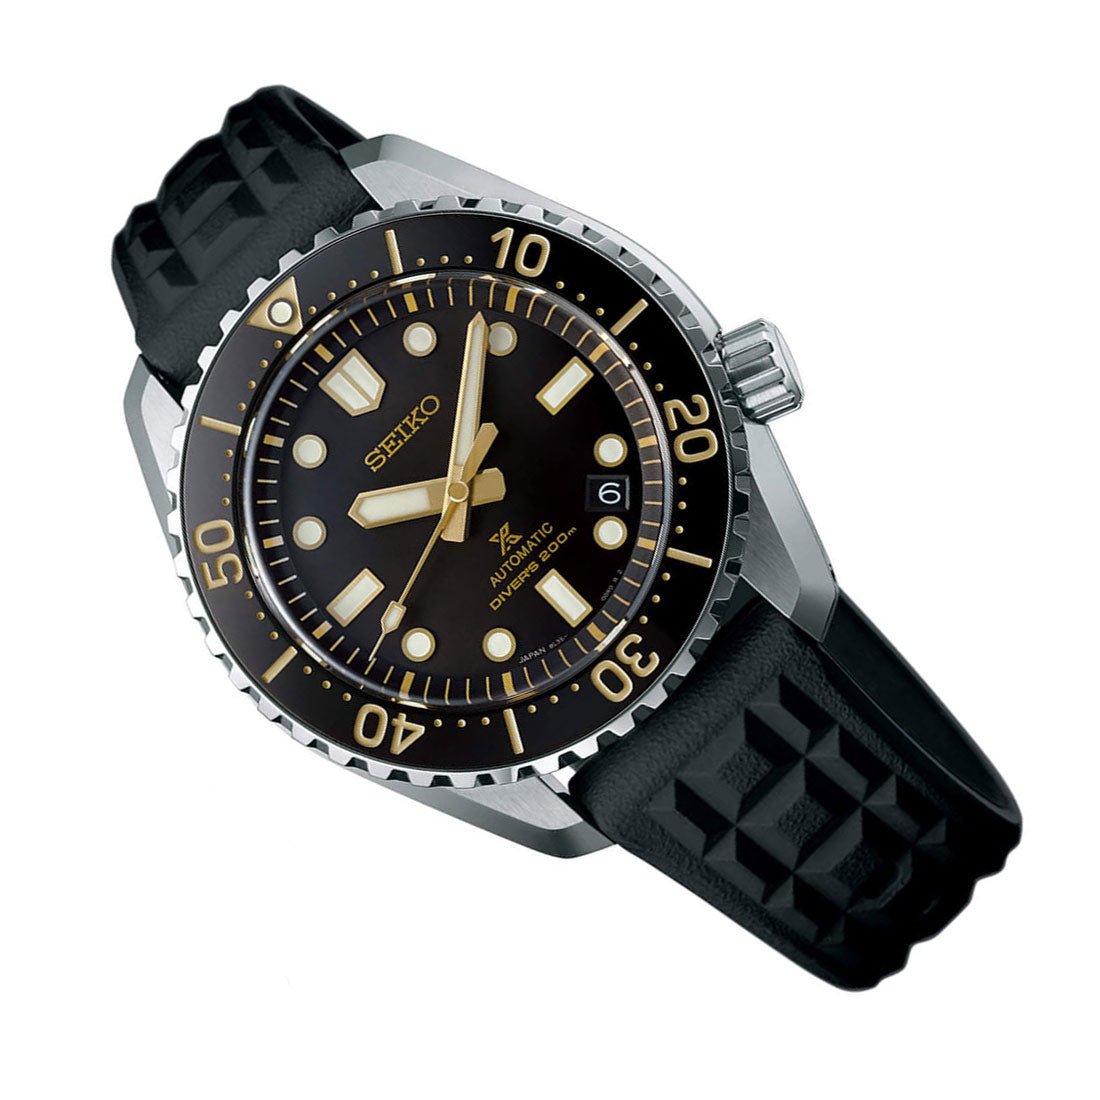 Seiko Prospex 1968 Divers Re-Creation Limited Edition 26 Jewels Watch SLA057 (PRE-ORDER) -Seiko